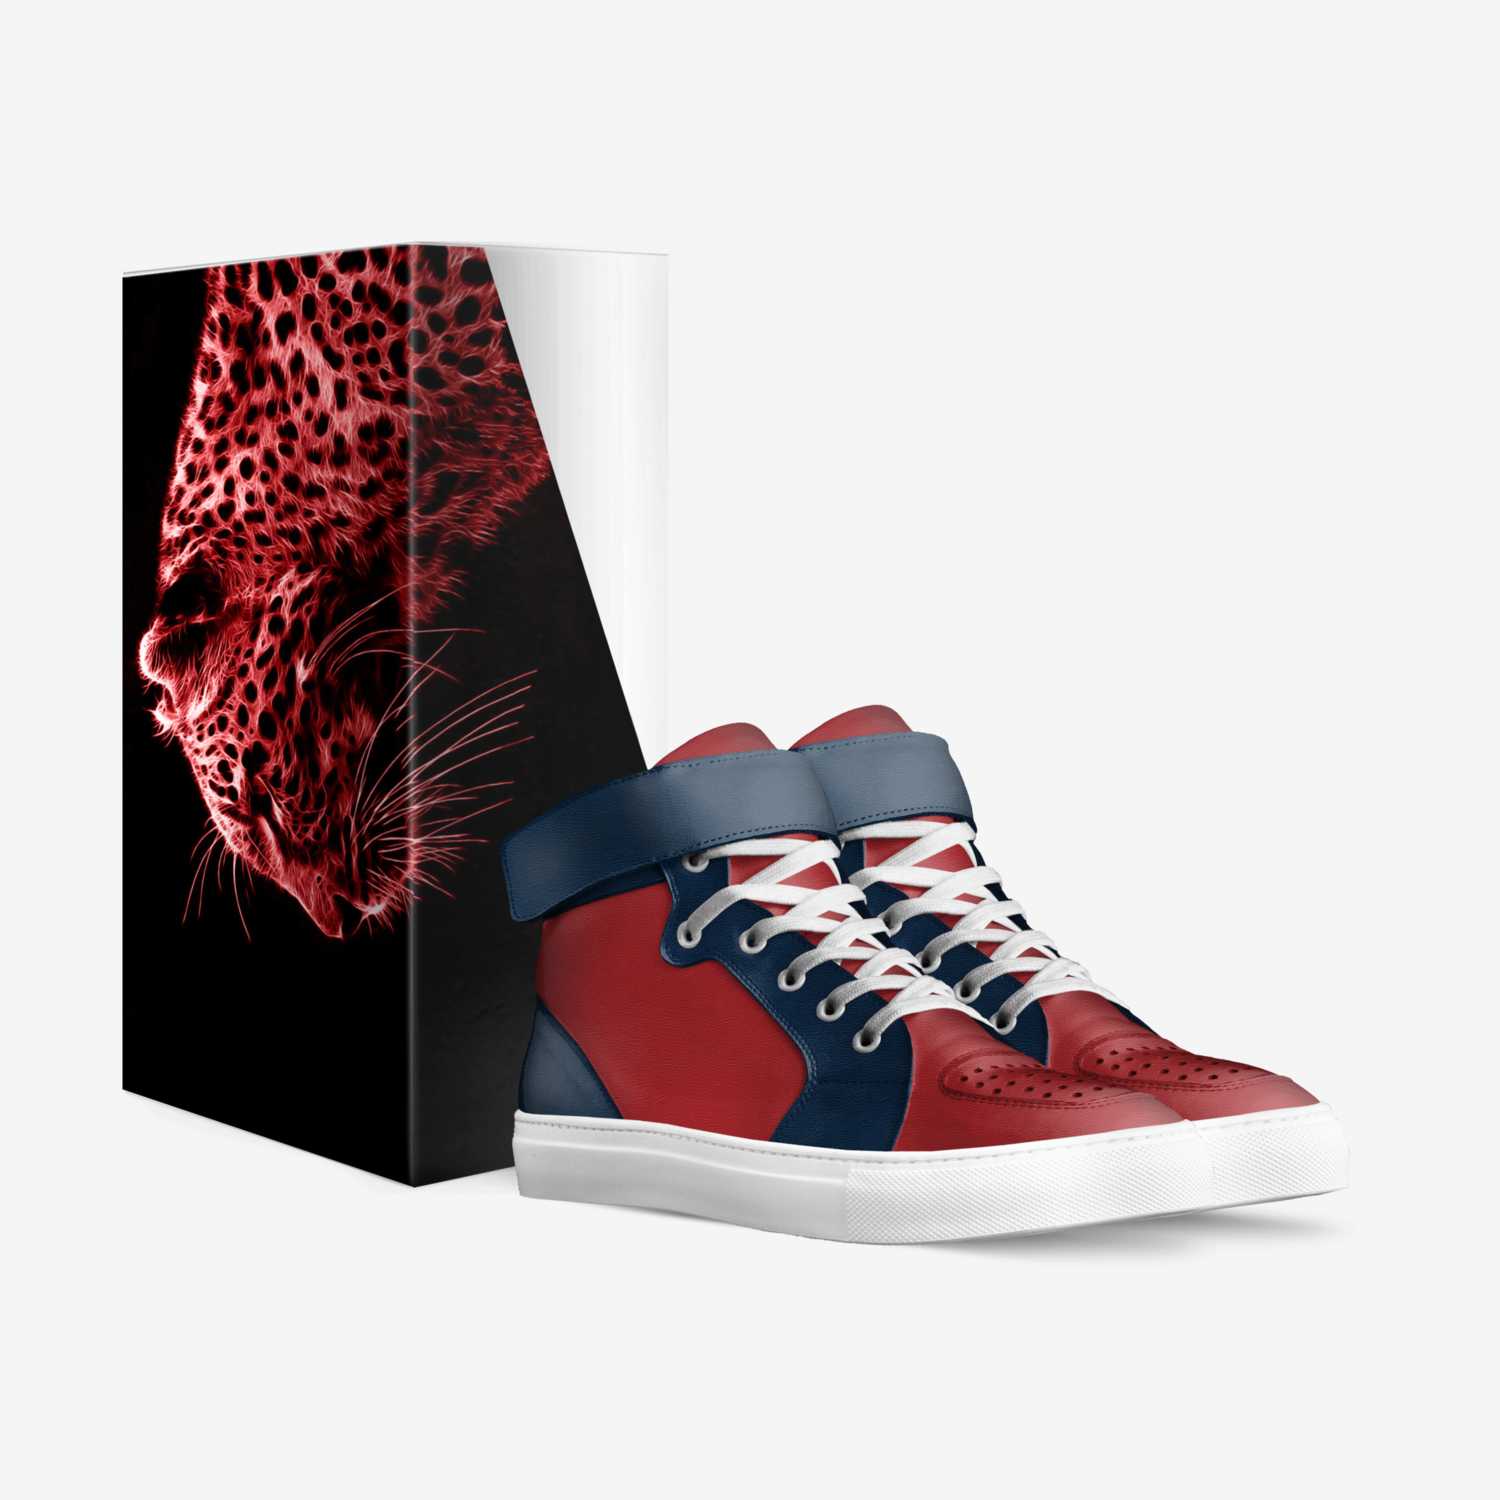 ADIFLY G custom made in Italy shoes by Giovani Adiyo | Box view